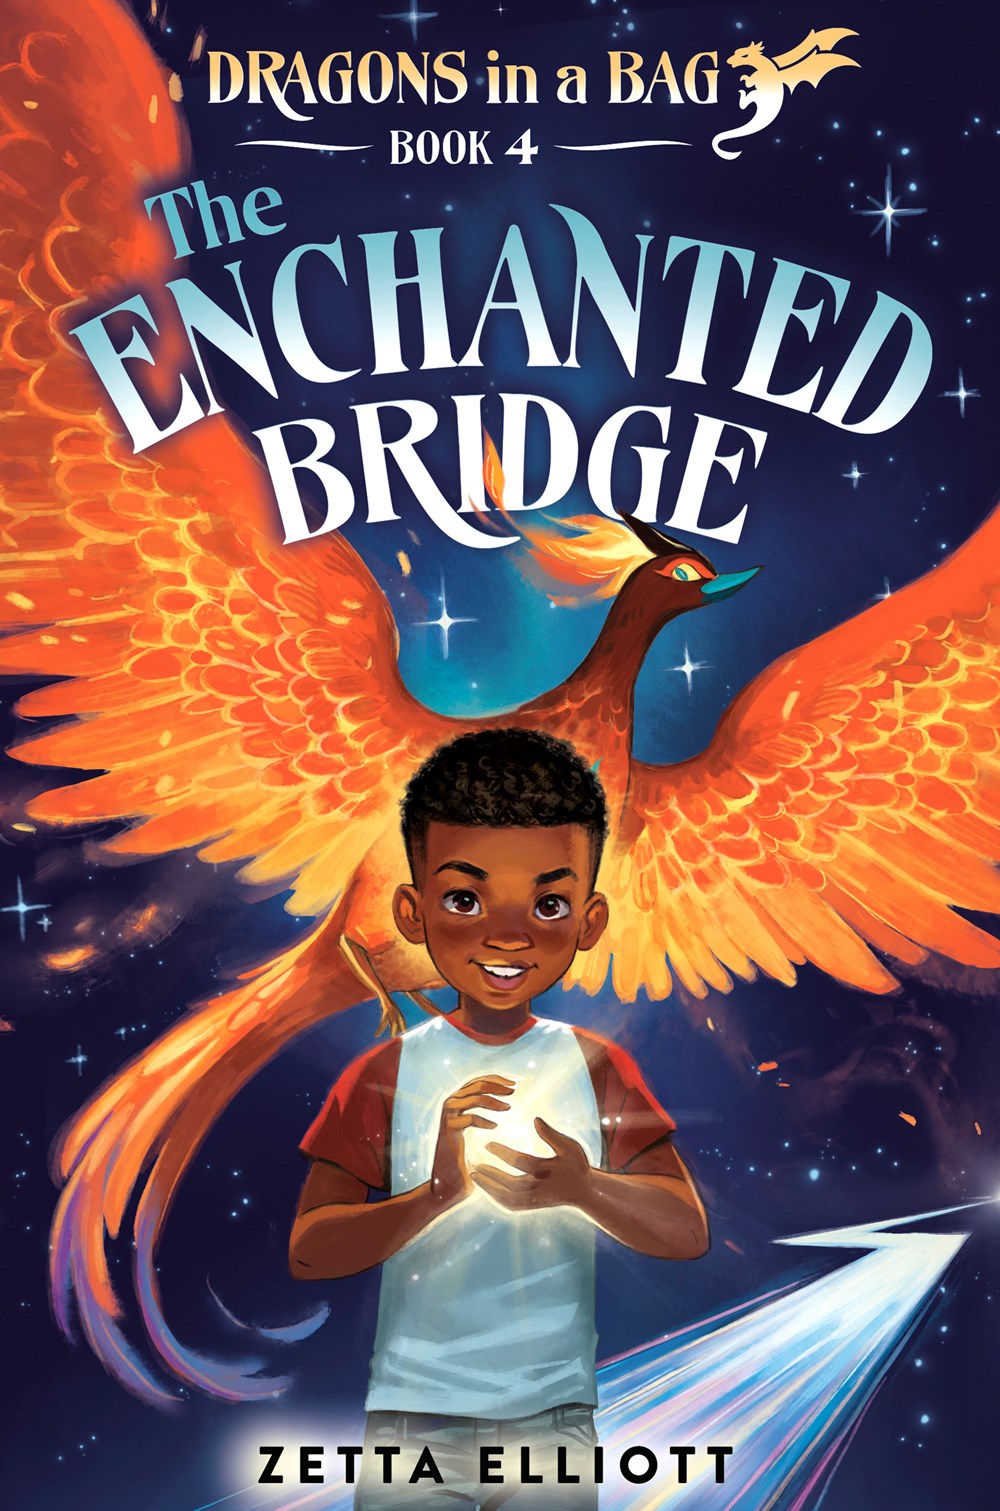 The Enchanted Bridge by Zetta Elliott